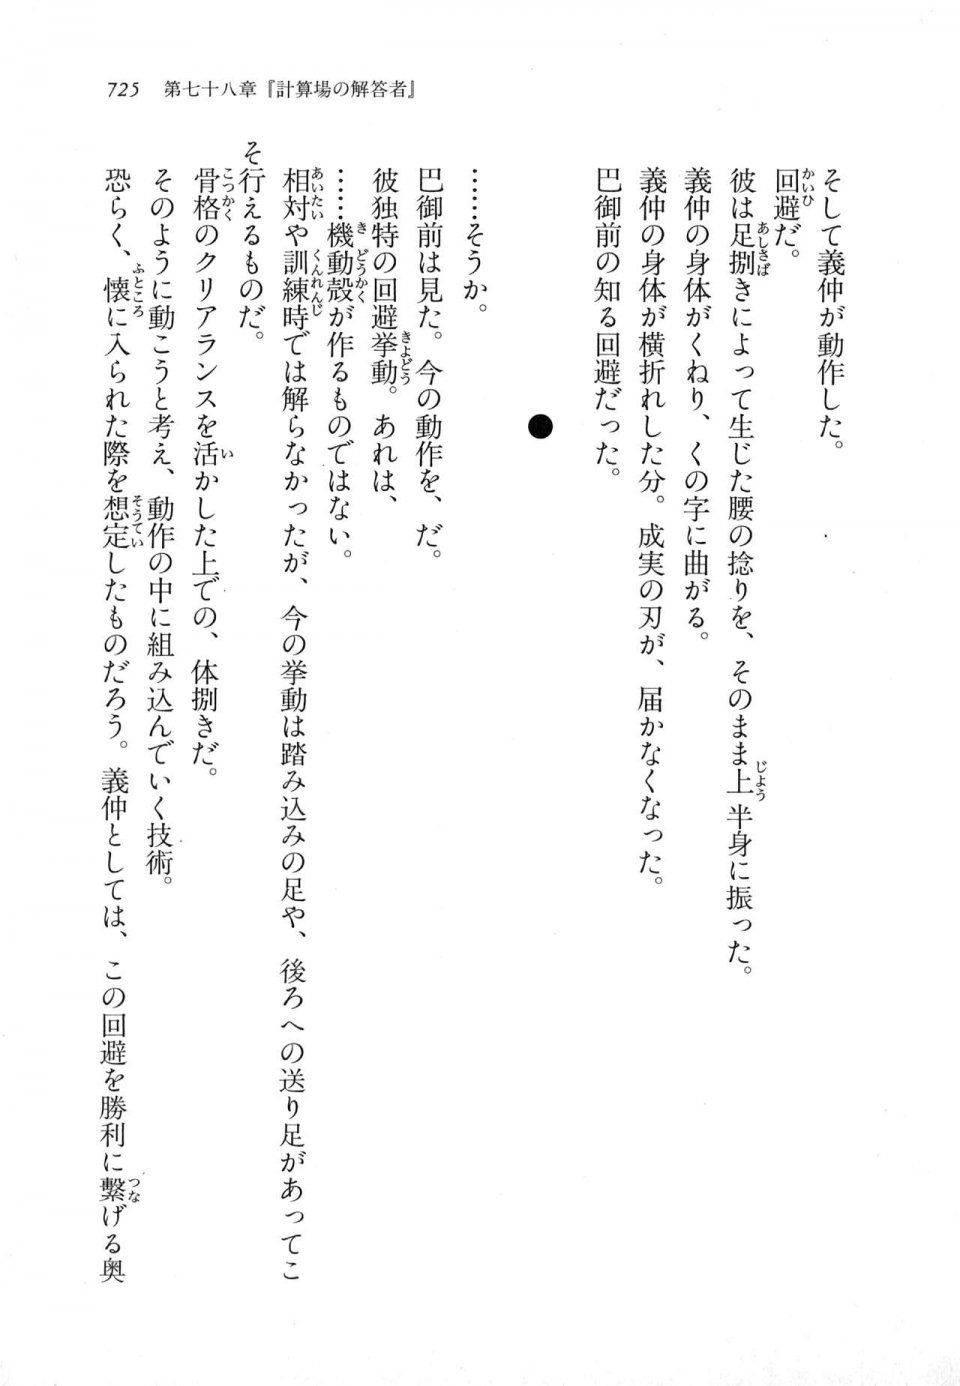 Kyoukai Senjou no Horizon LN Vol 18(7C) Part 2 - Photo #165